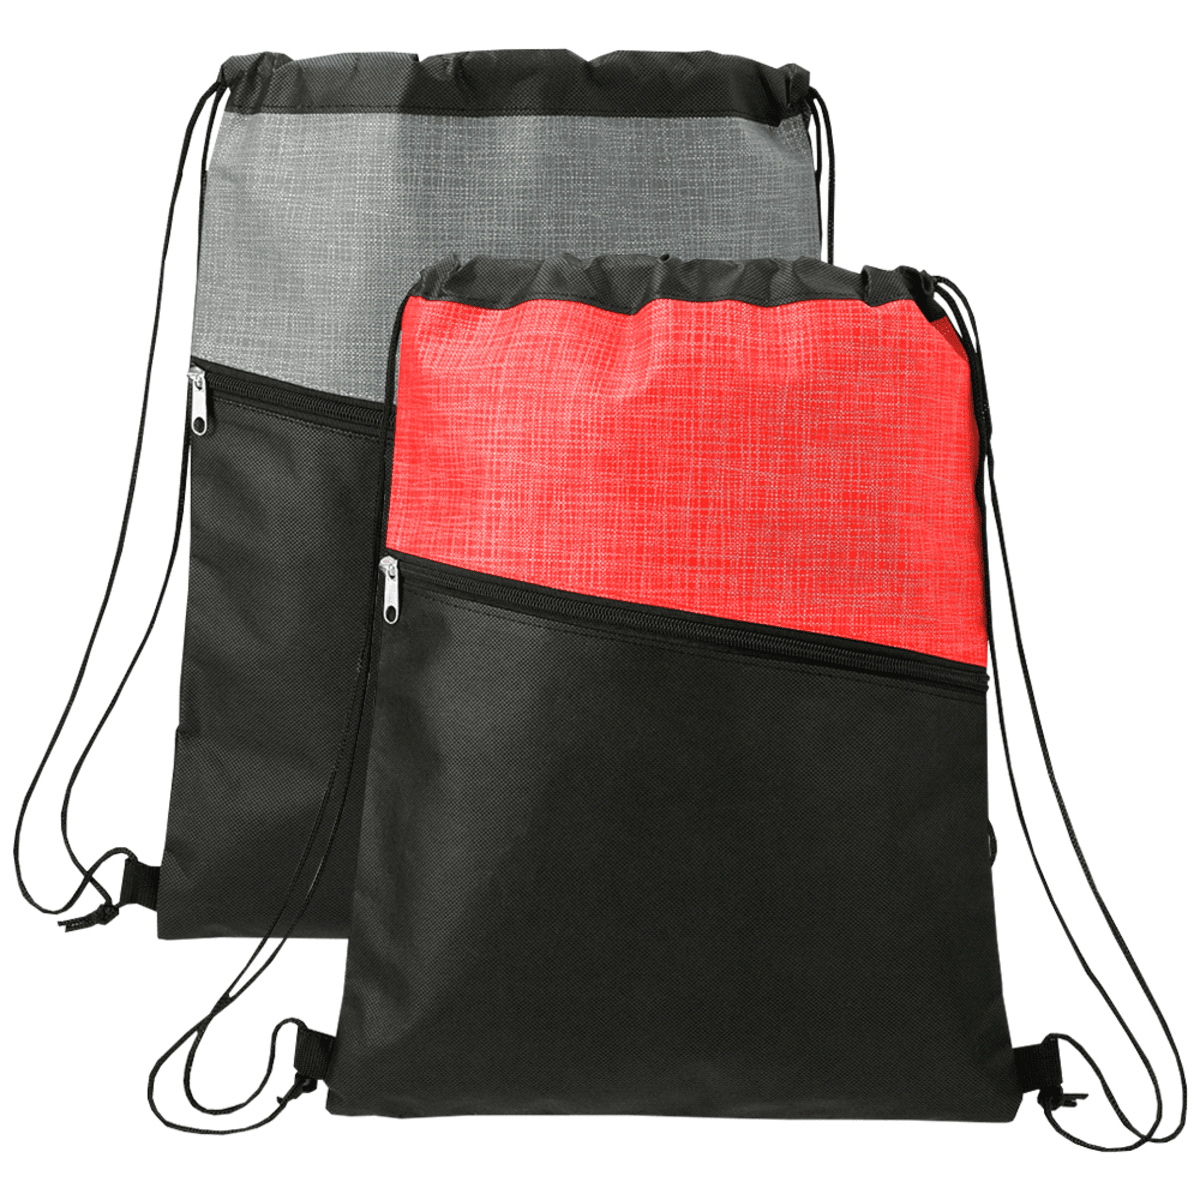 Cross Weave Zippered Drawstring Bag